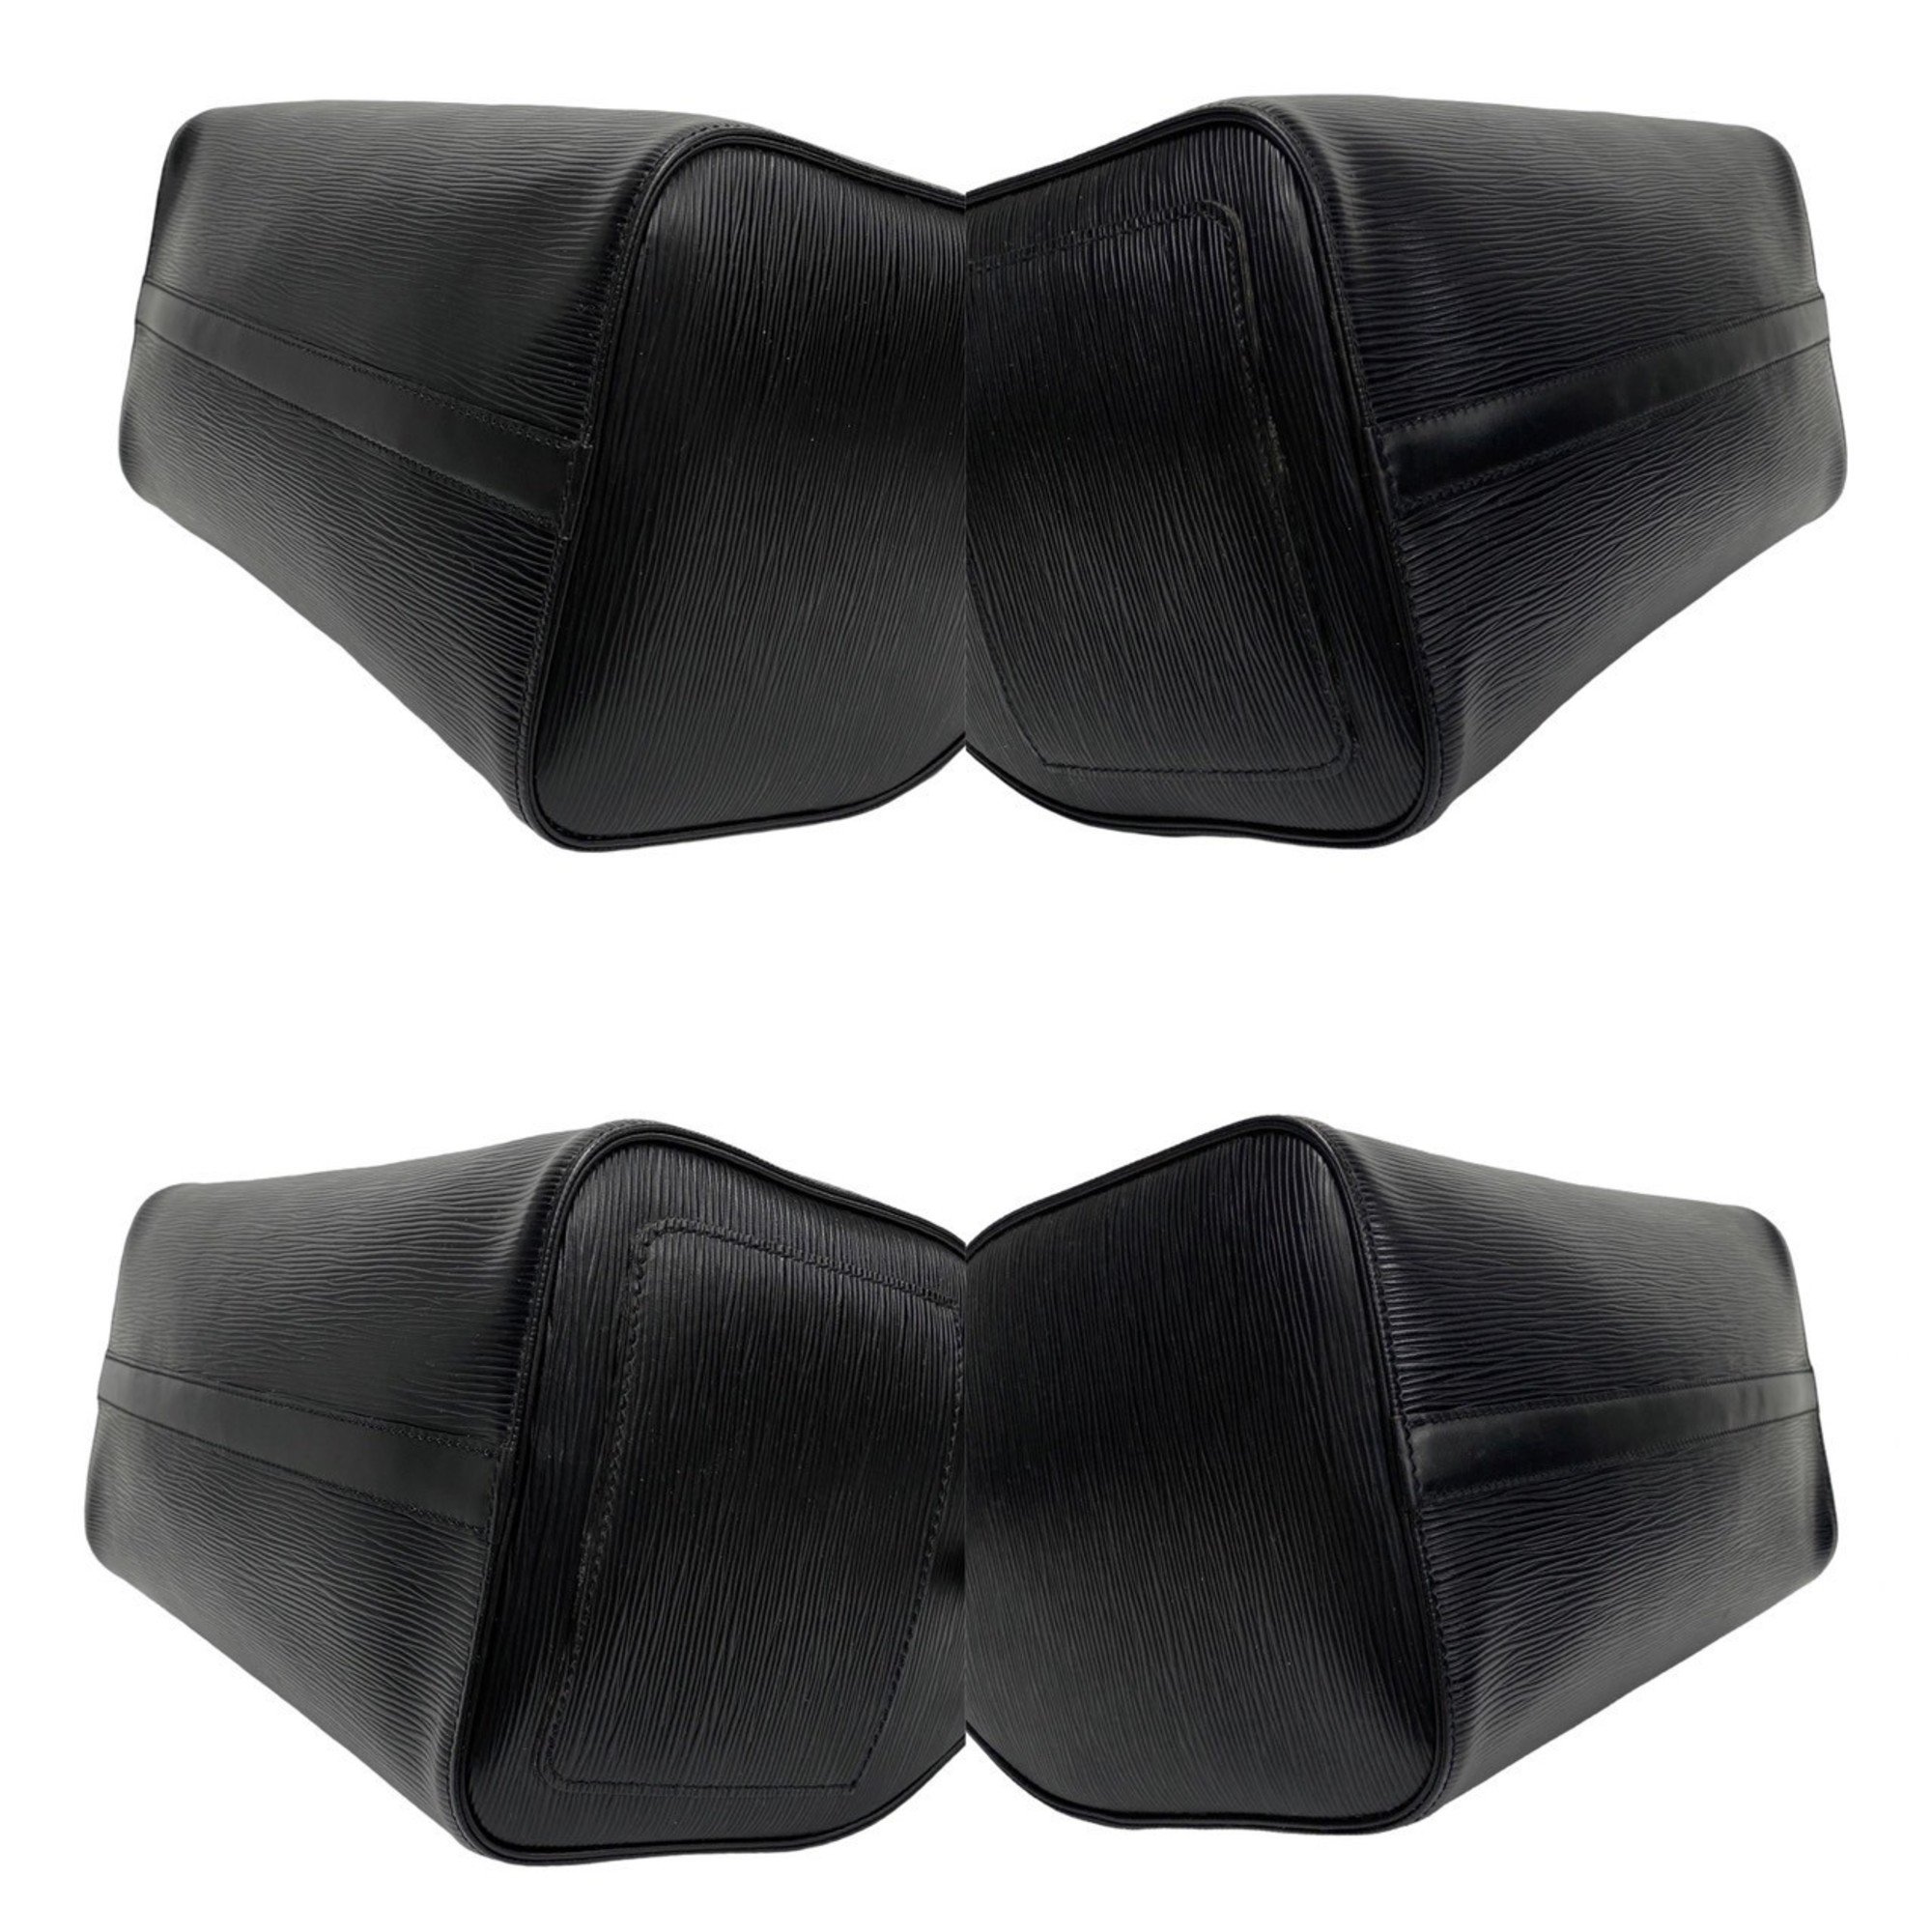 LOUIS VUITTON Louis Vuitton Speedy 30 Epi Leather Handbag Boston Bag Black Noir 23907